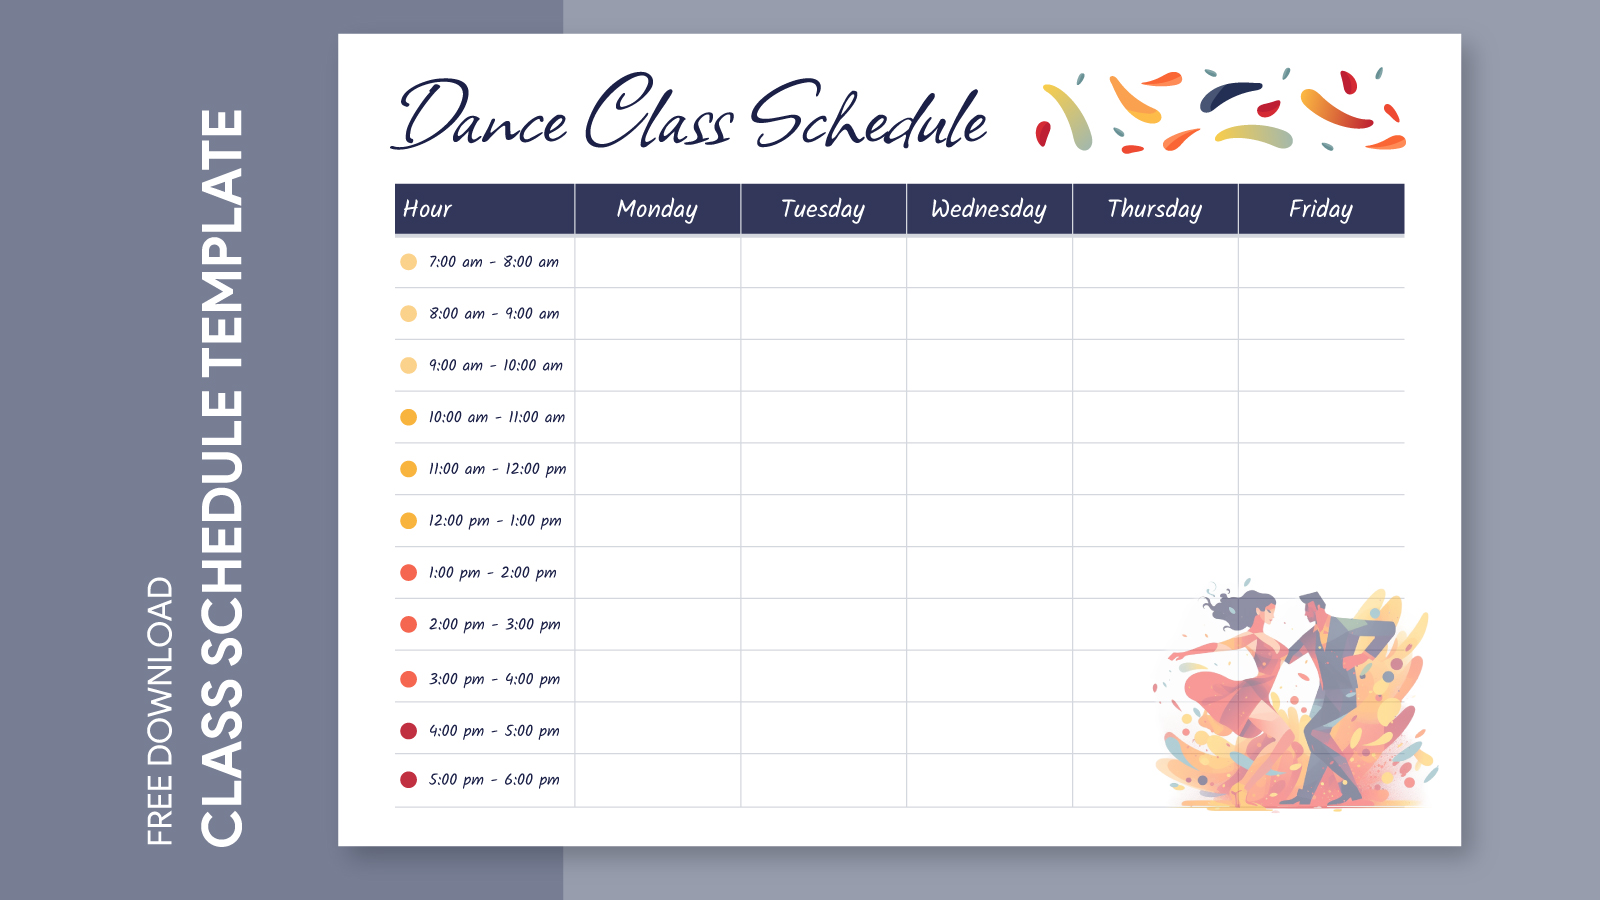 Dance Class Schedule Free Google Docs Template gdoc.io